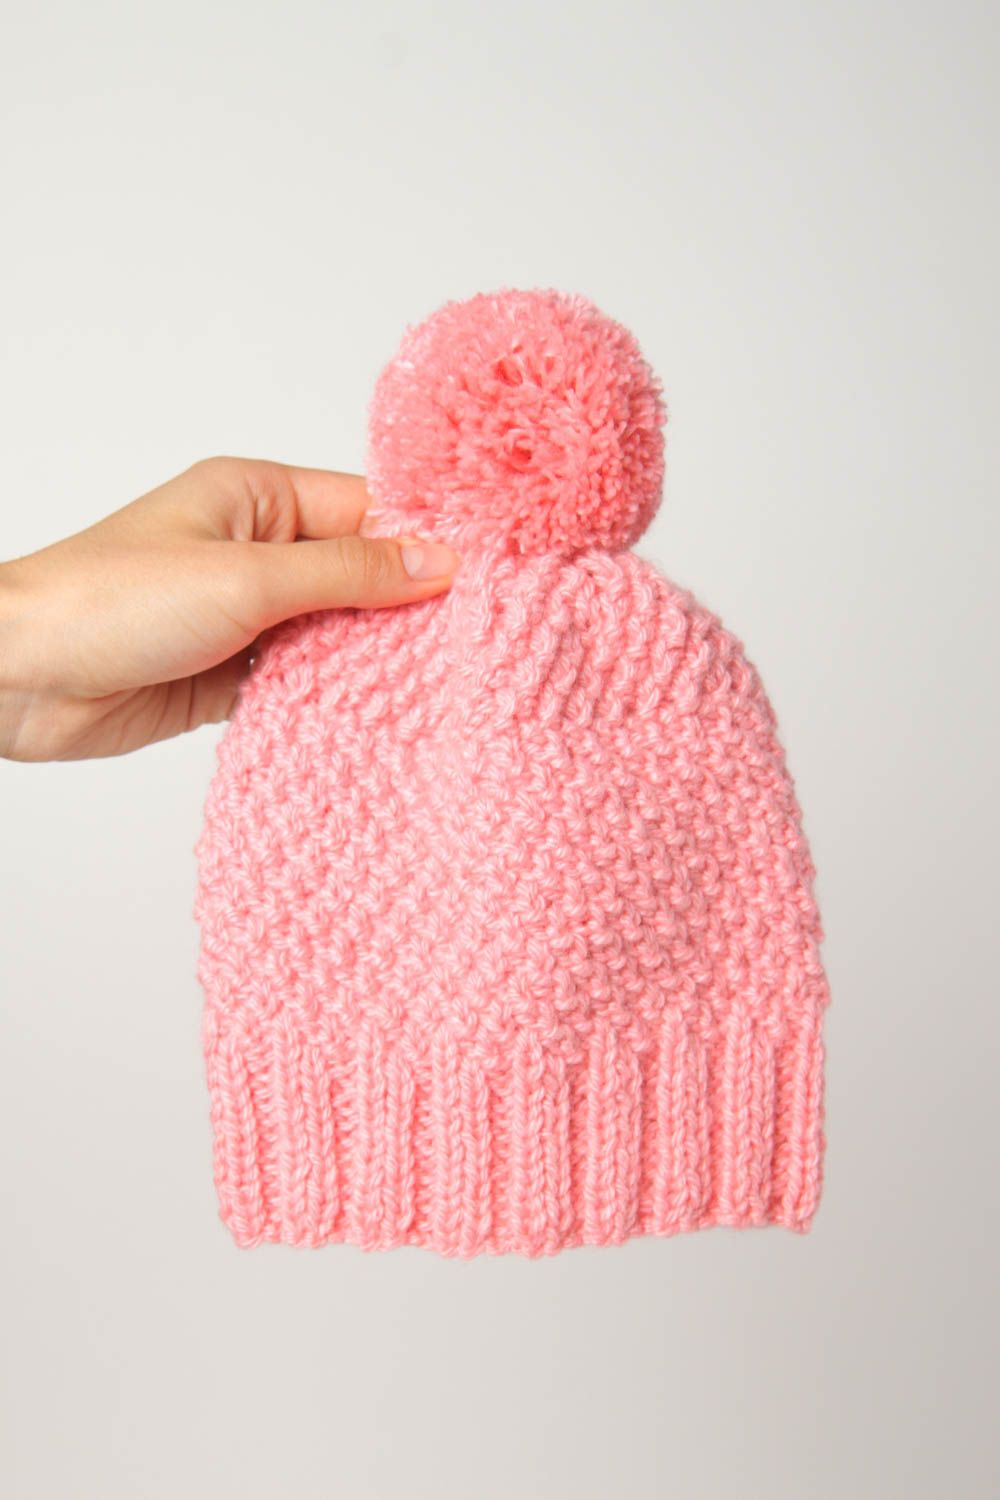 Handmade beautiful pink cap knitted designer cap stylish cute accessory photo 2